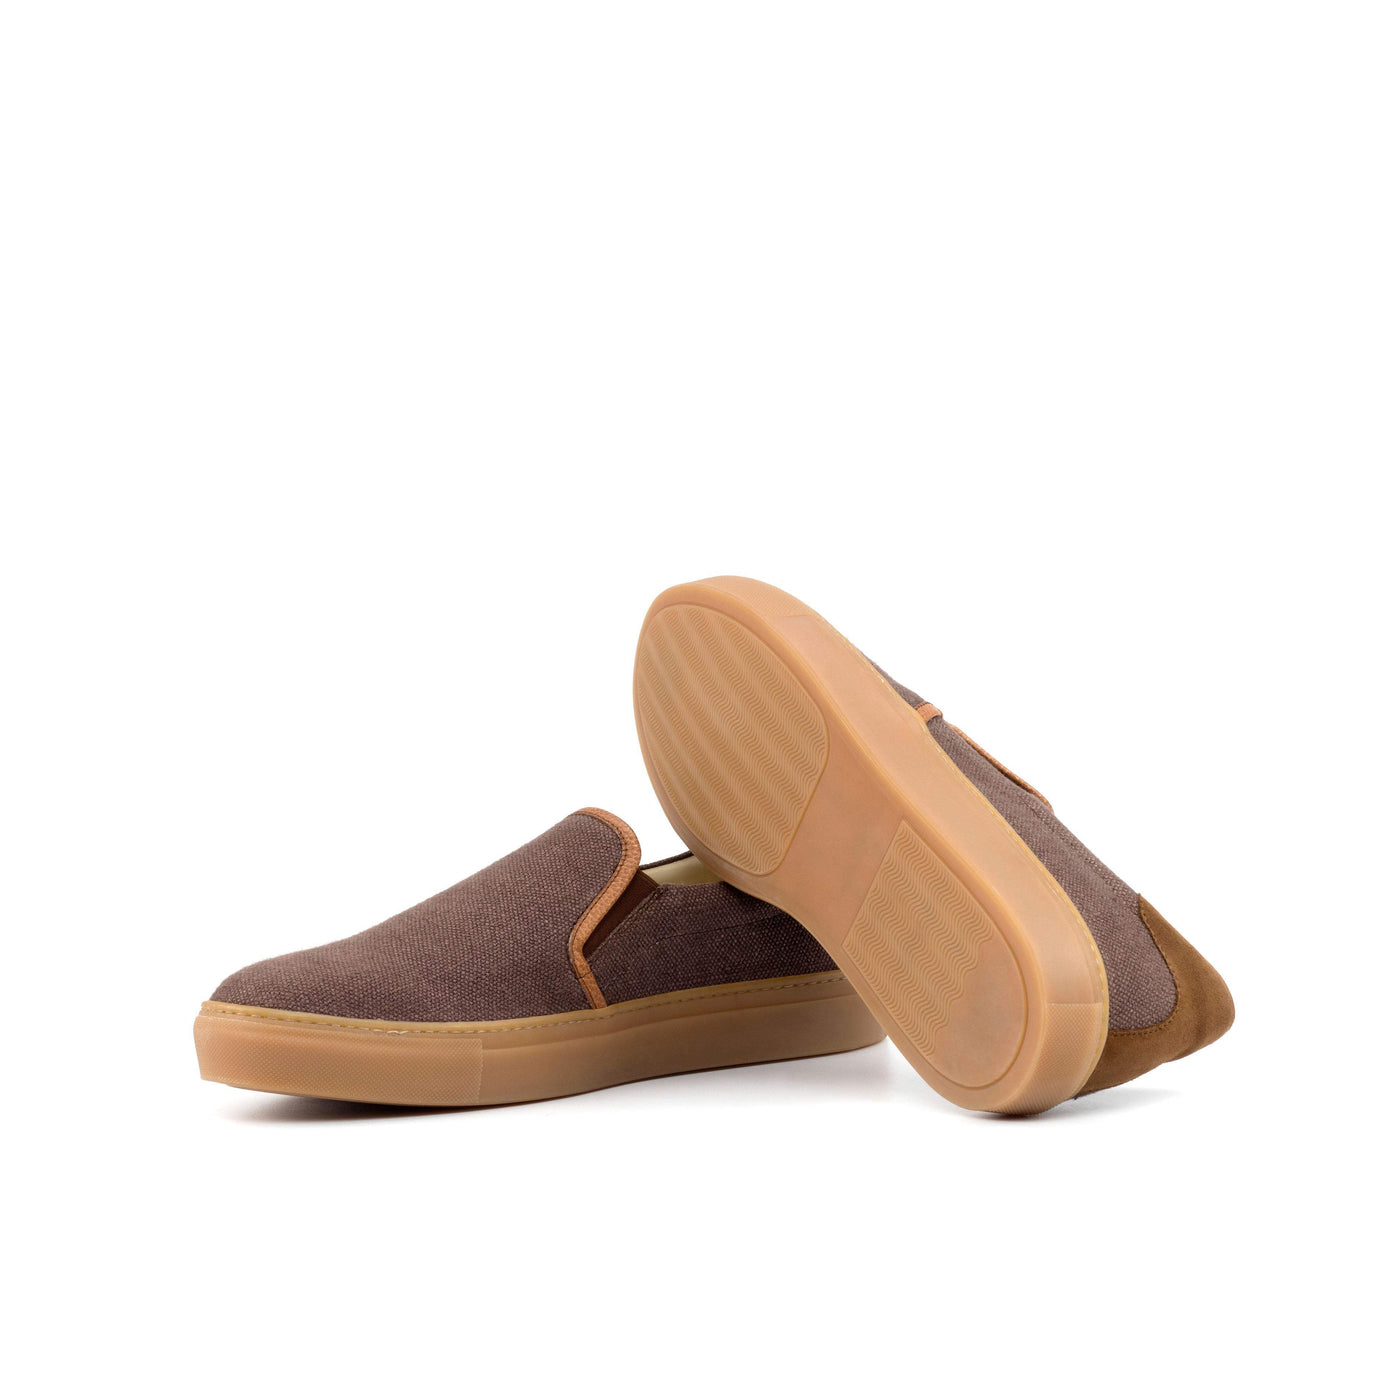 Men's Slip On Shoes Leather Brown 4895 2- MERRIMIUM